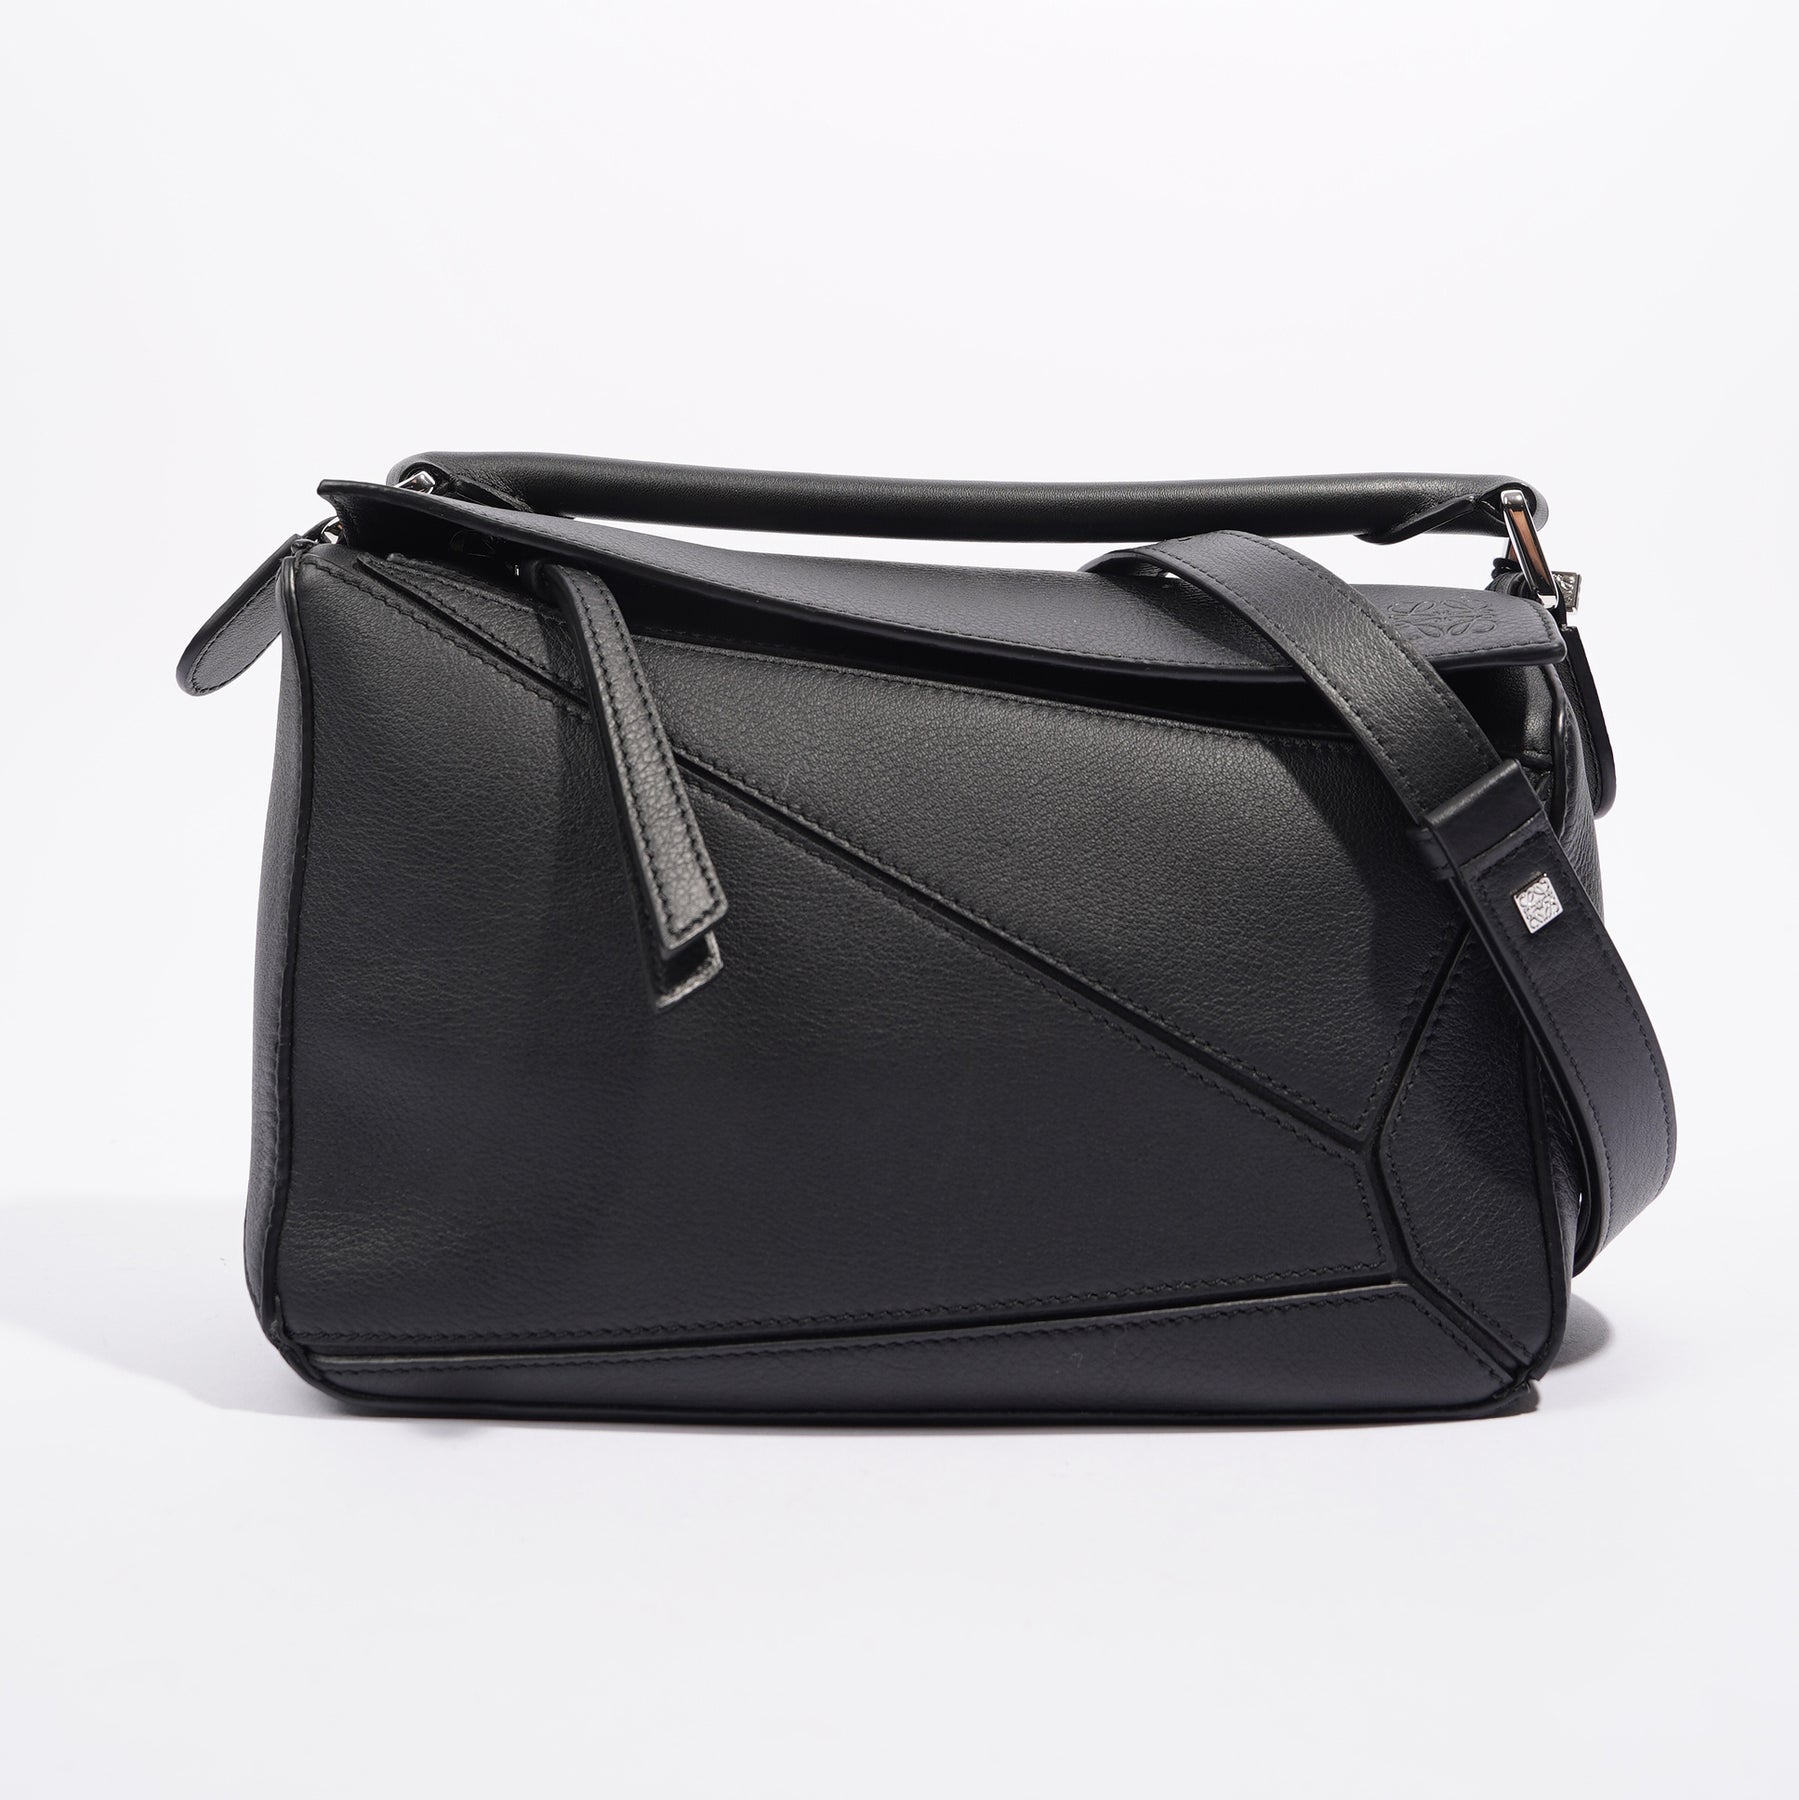 Genuine Loewe Leather Clutch Handbag With Coin Purse Beige off 